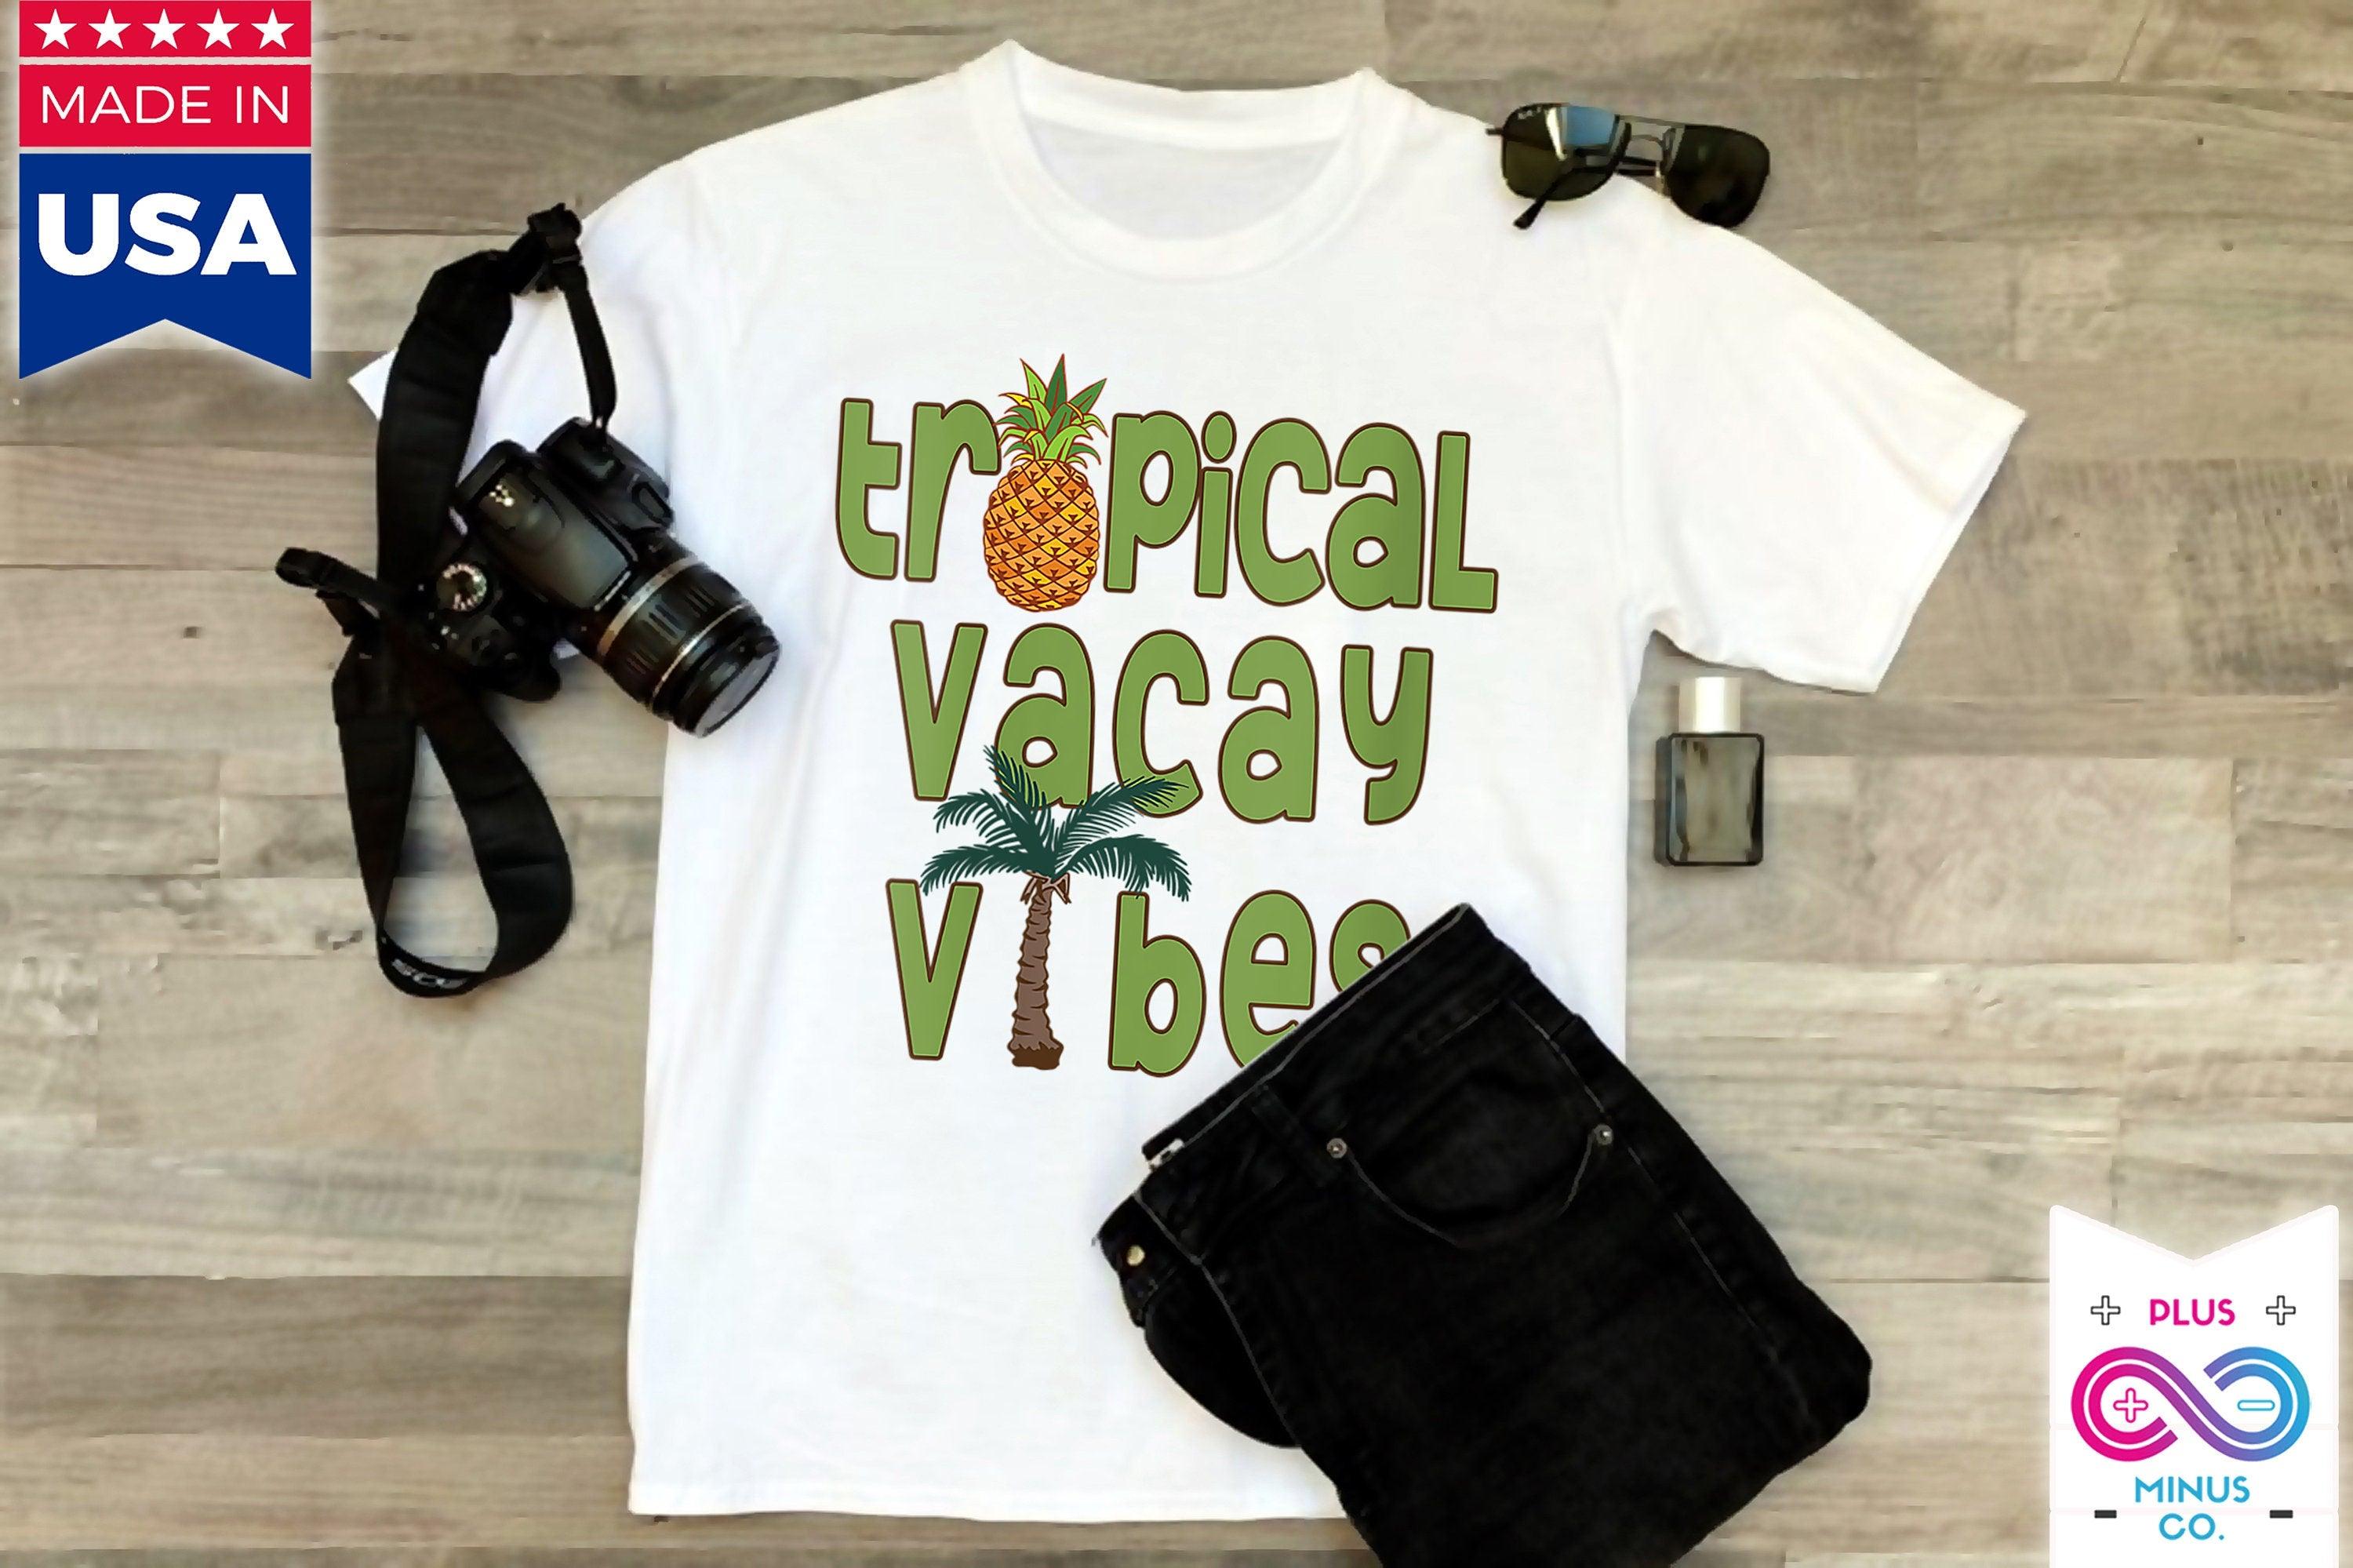 Tropical Vacay Vibes Tshirt, Pineapple Palm Trees Retro Shirt, Vacay Vibes, Tropical Shirts, Travel Tee Shirts, Vacation Tees, Vacay Mode, - plusminusco.com